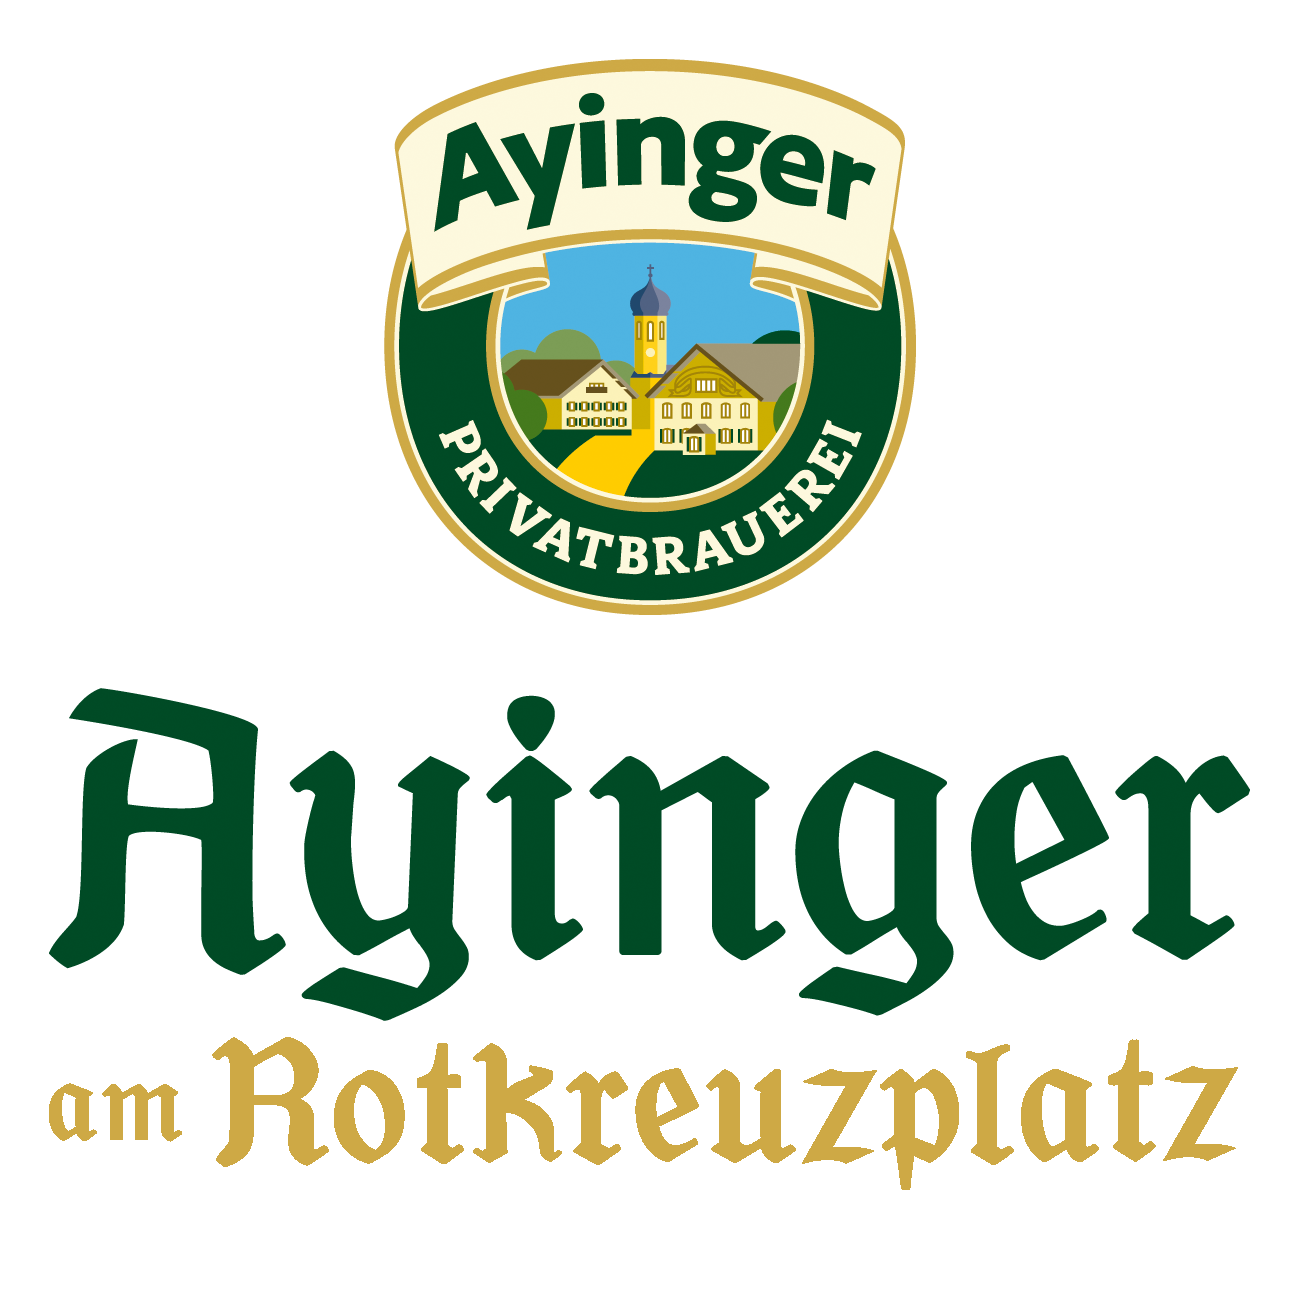 Ayinger am Rotkreuzplatz